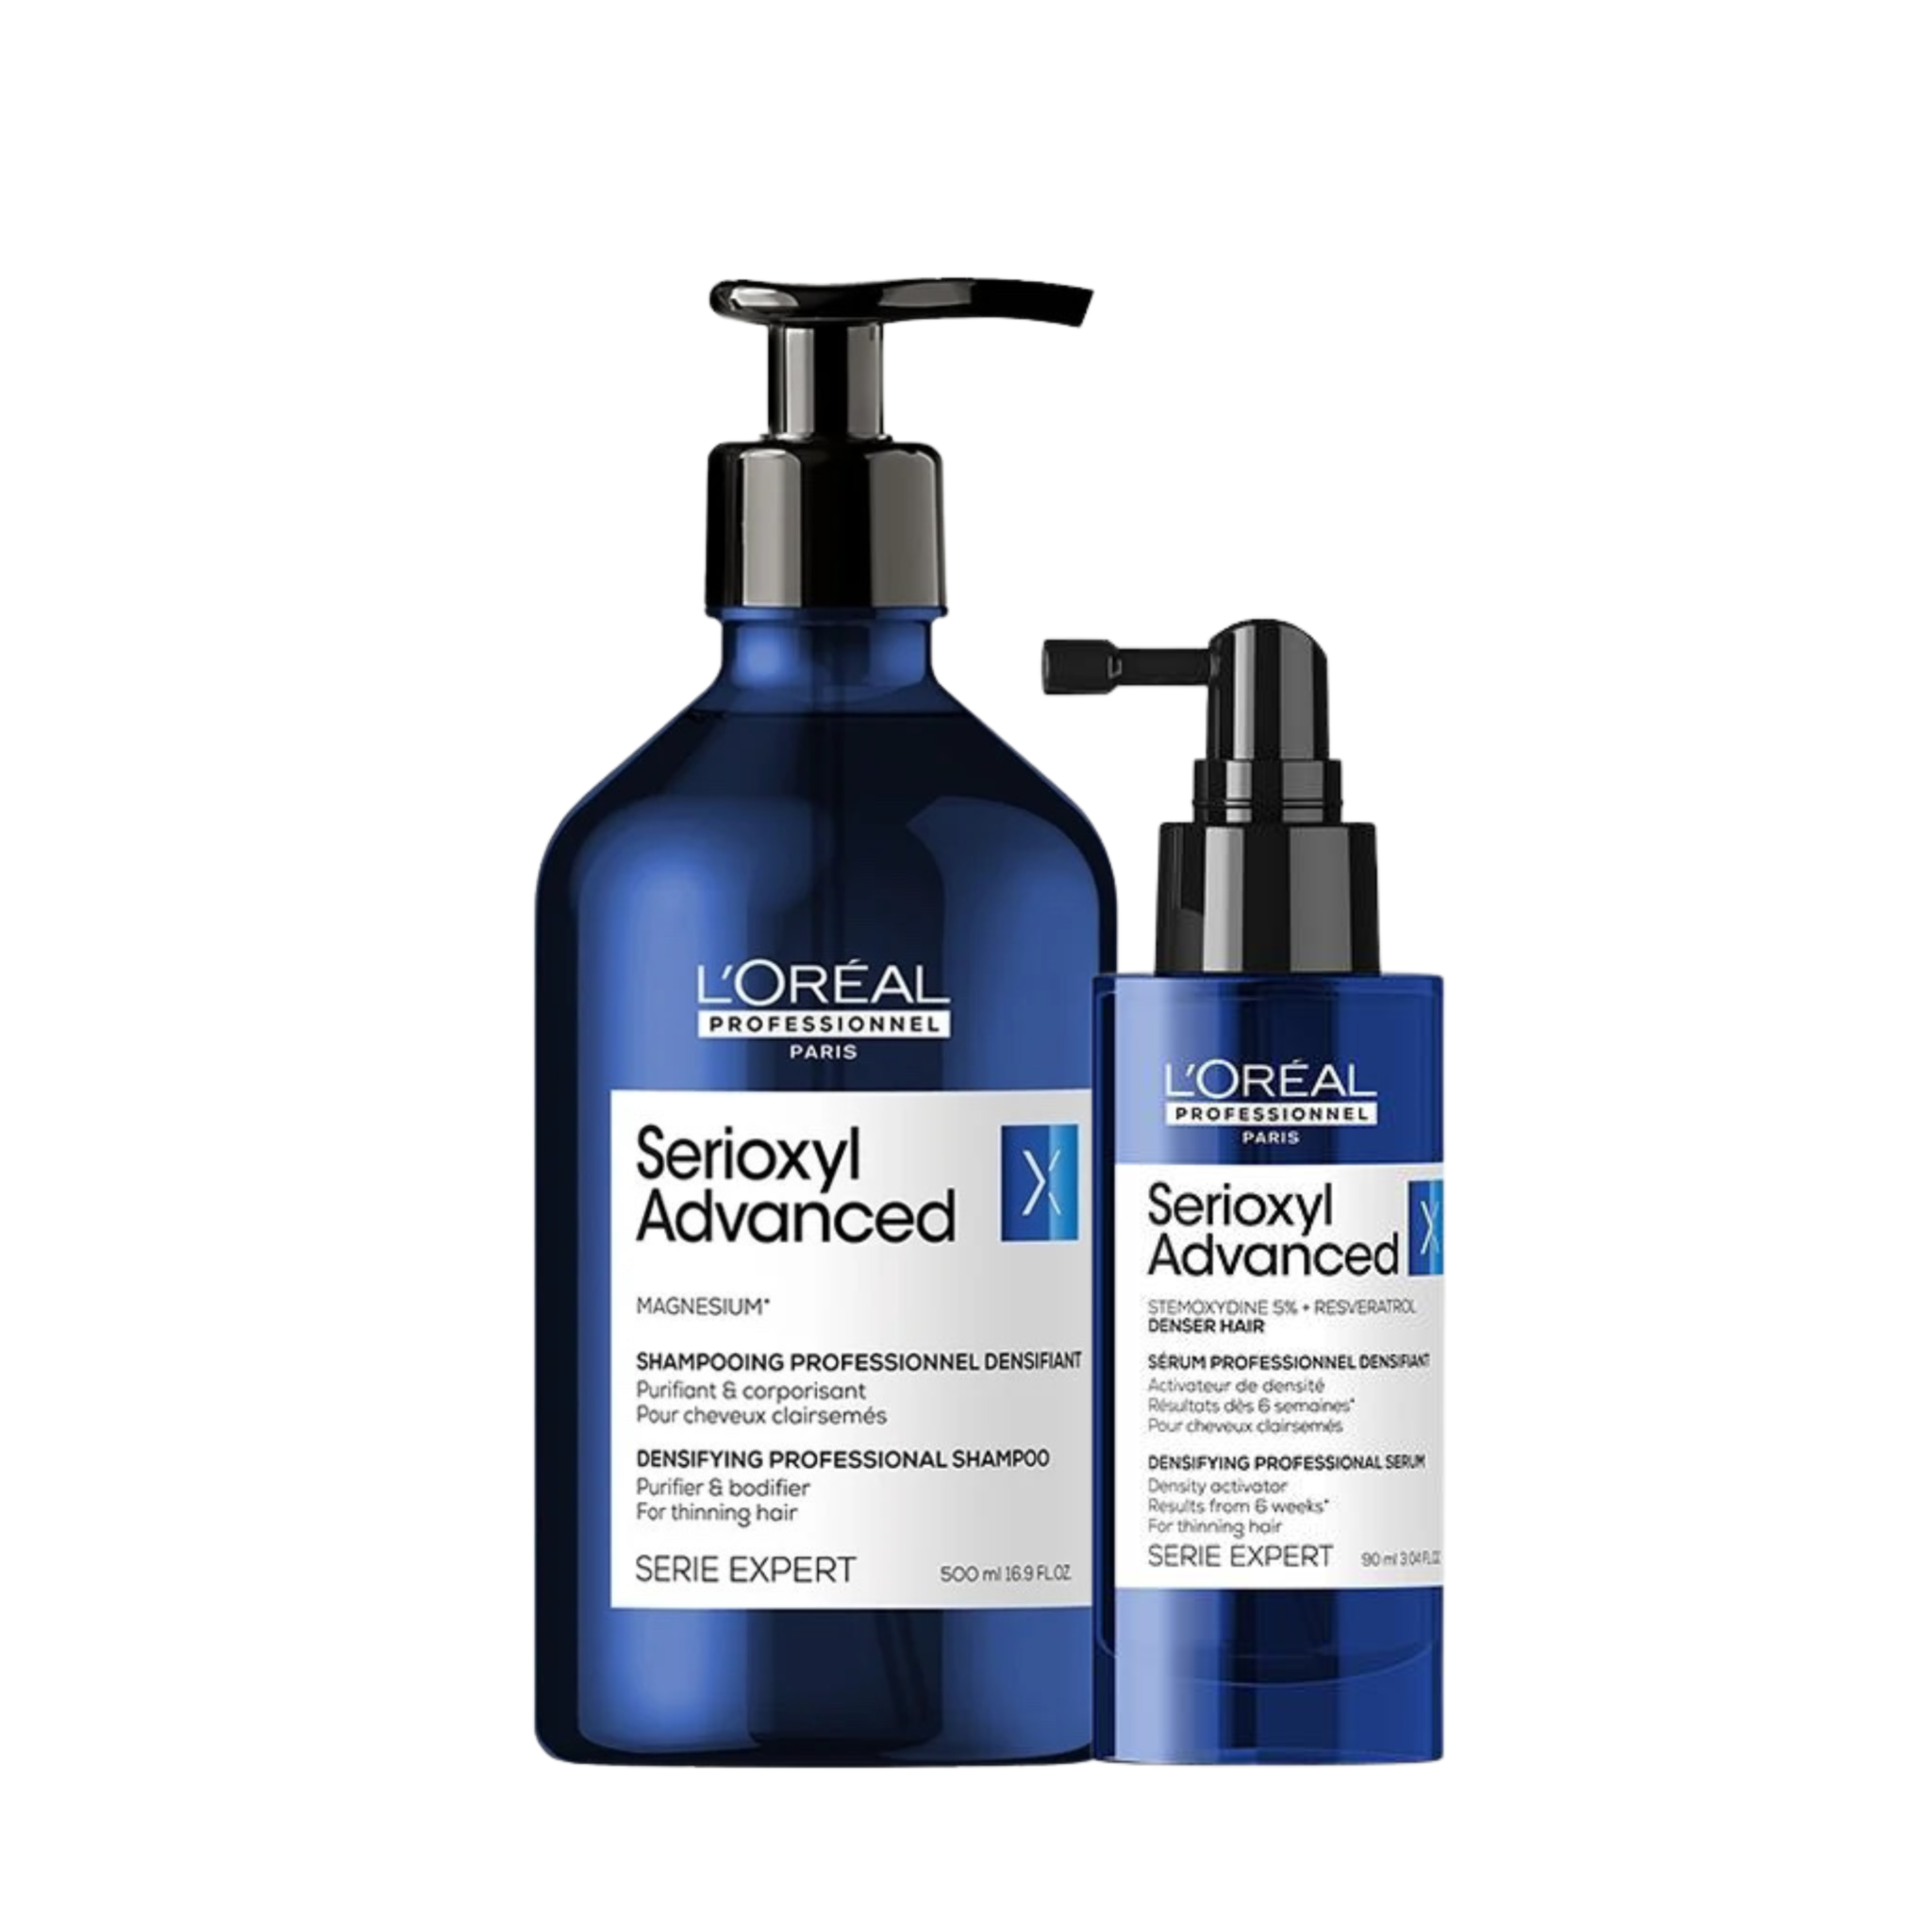 Bundle: Serioxyl Advanced Serum + Serioxyl Advanced Shampoo